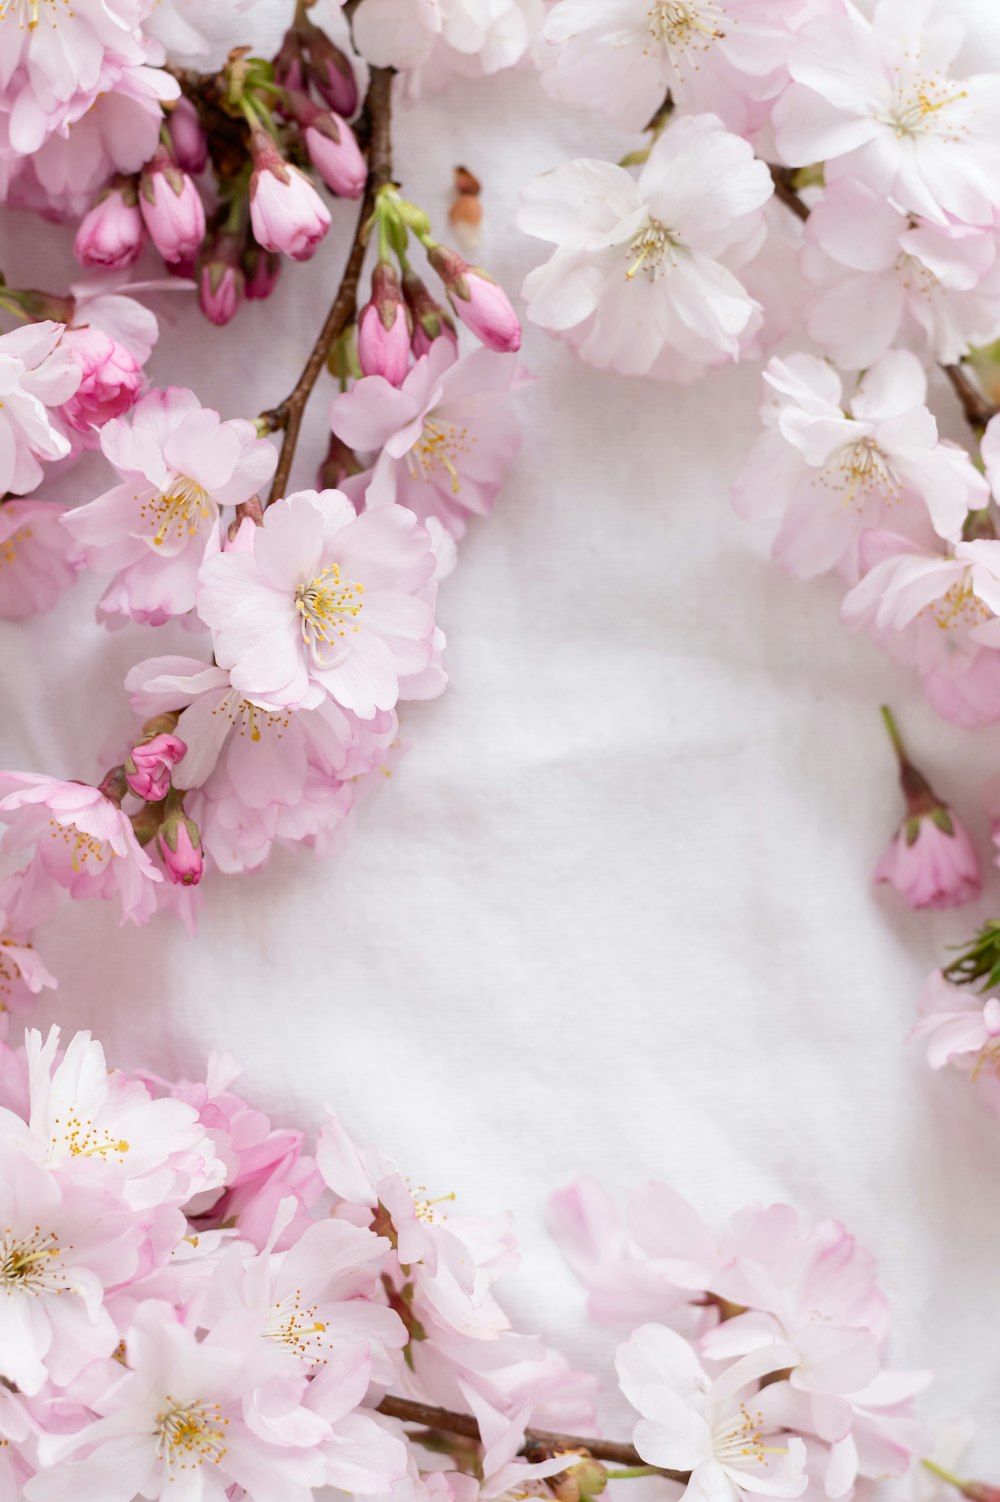 flores cor-de-rosa e brancas no têxtil branco